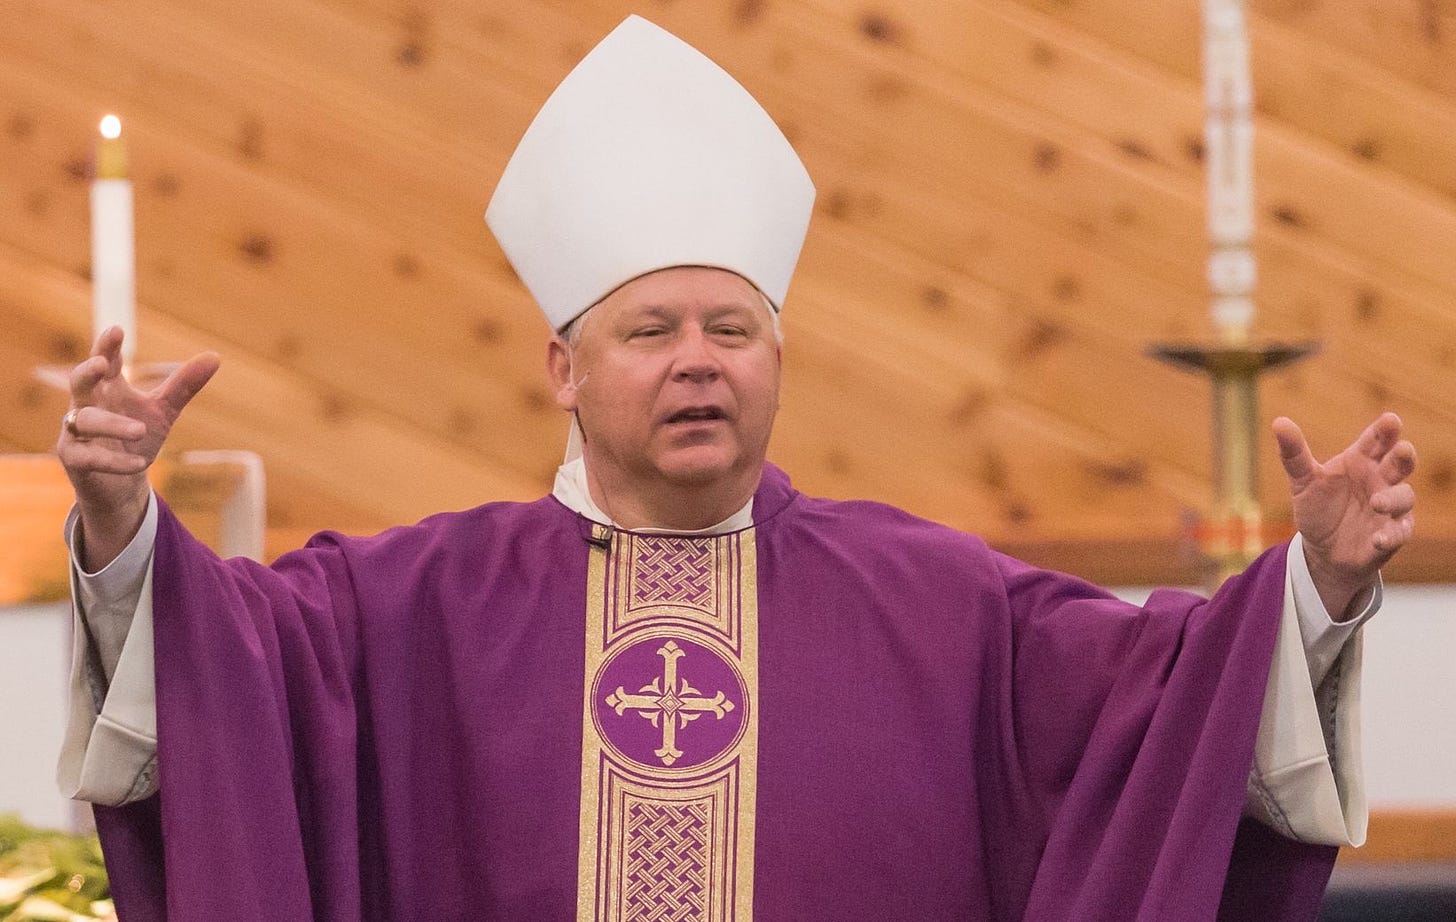 Stika, Knoxville diocese to face apostolic visitation